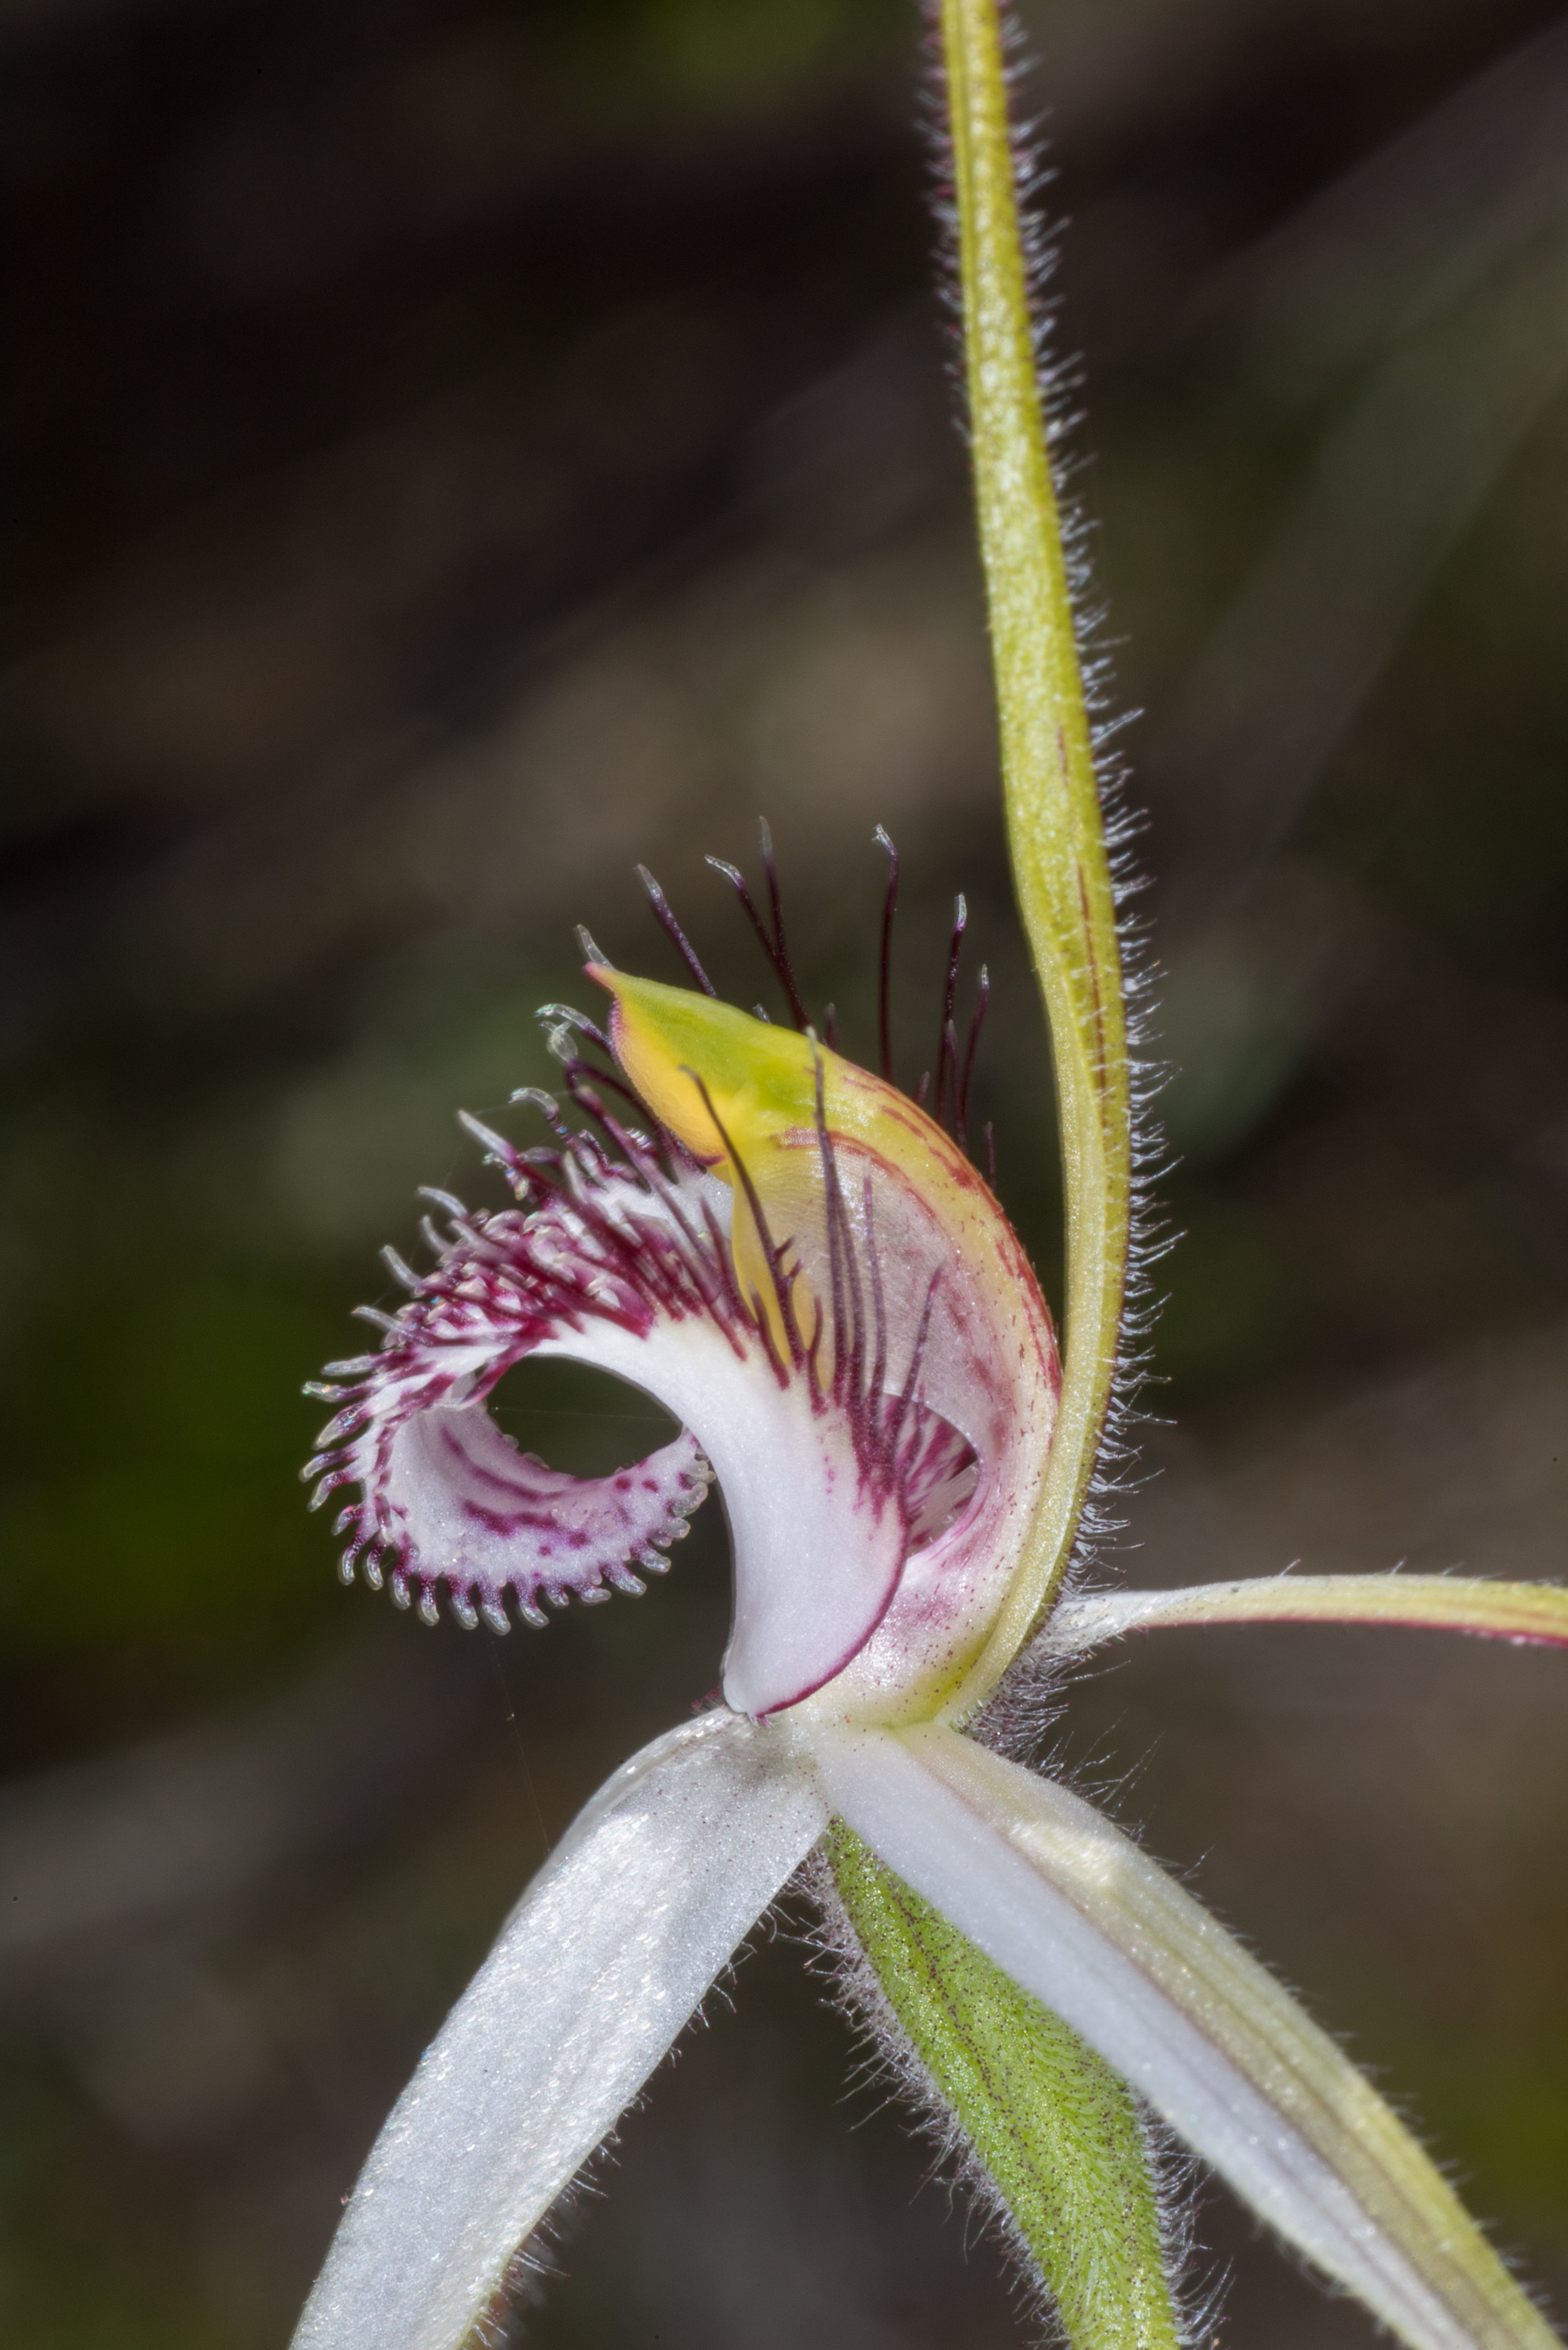  Caladenia longicauda ssp. borealis – Daddy-long-legs Spider Orchid, Wotto Nature Reserve, Eneabba area 